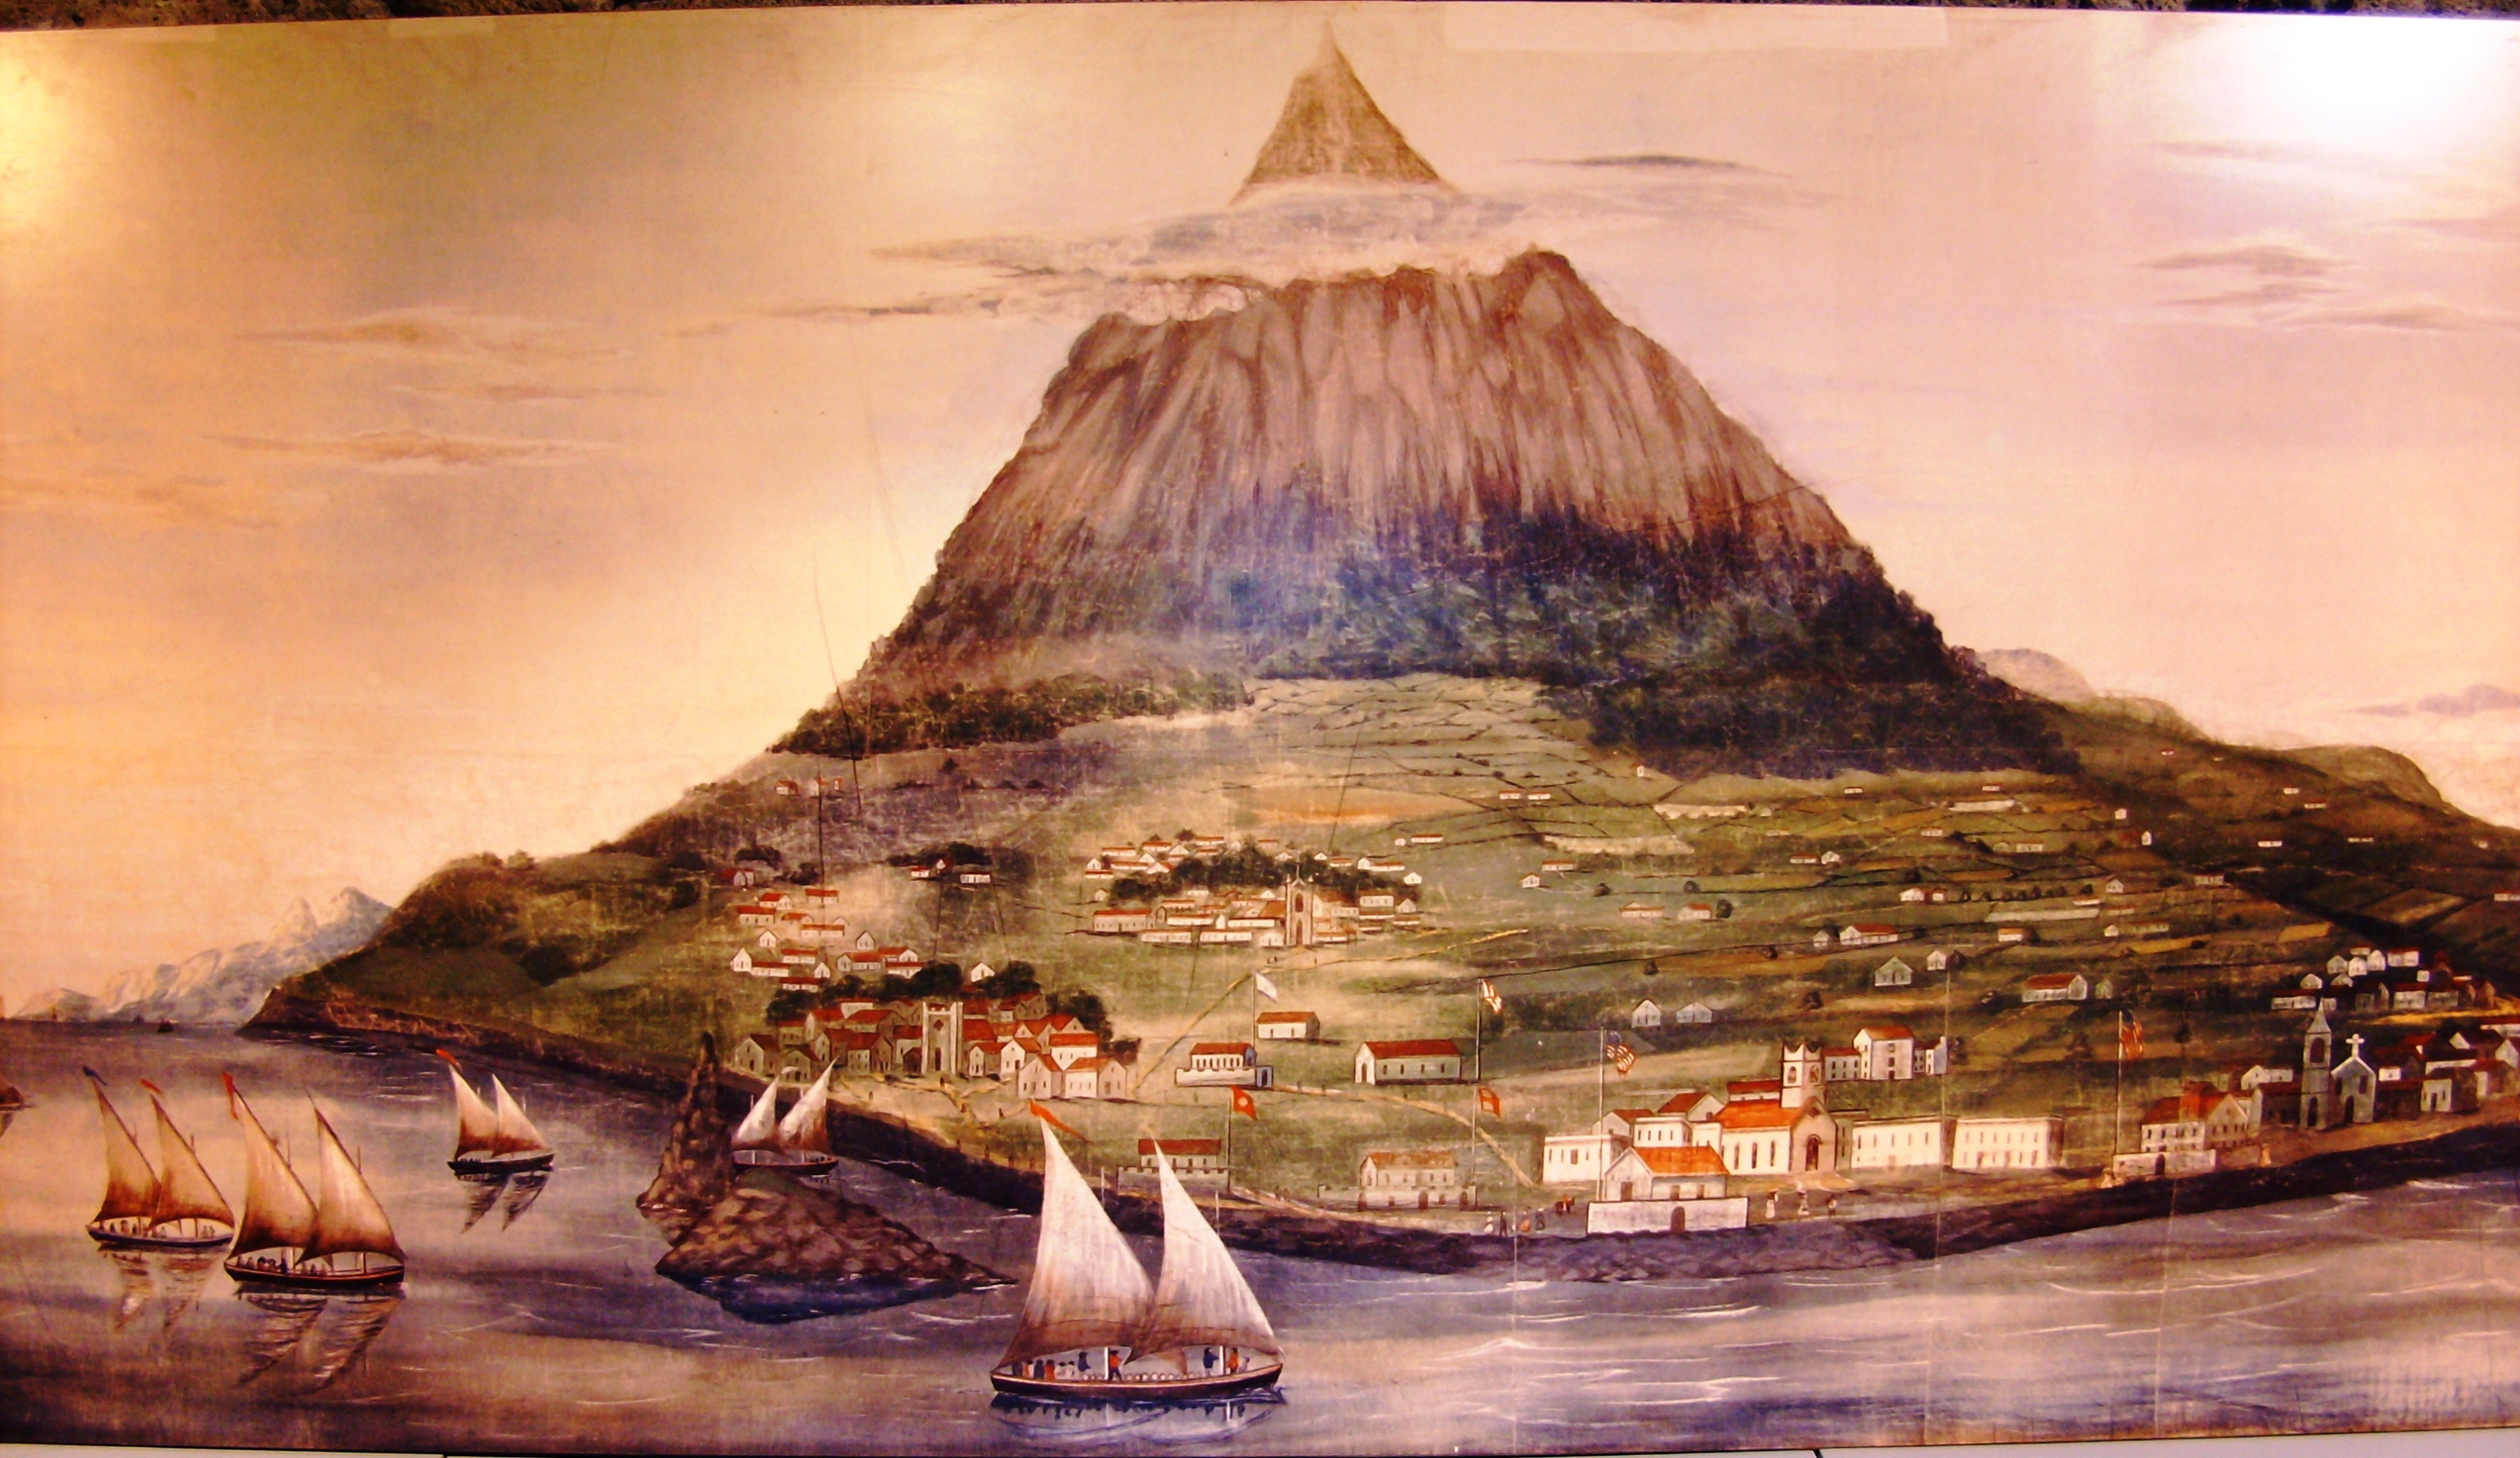 Pico Island - Russell & Purrington - A Whaling Voyage 'Round the World, 1848 - Museu dos Baleeiros